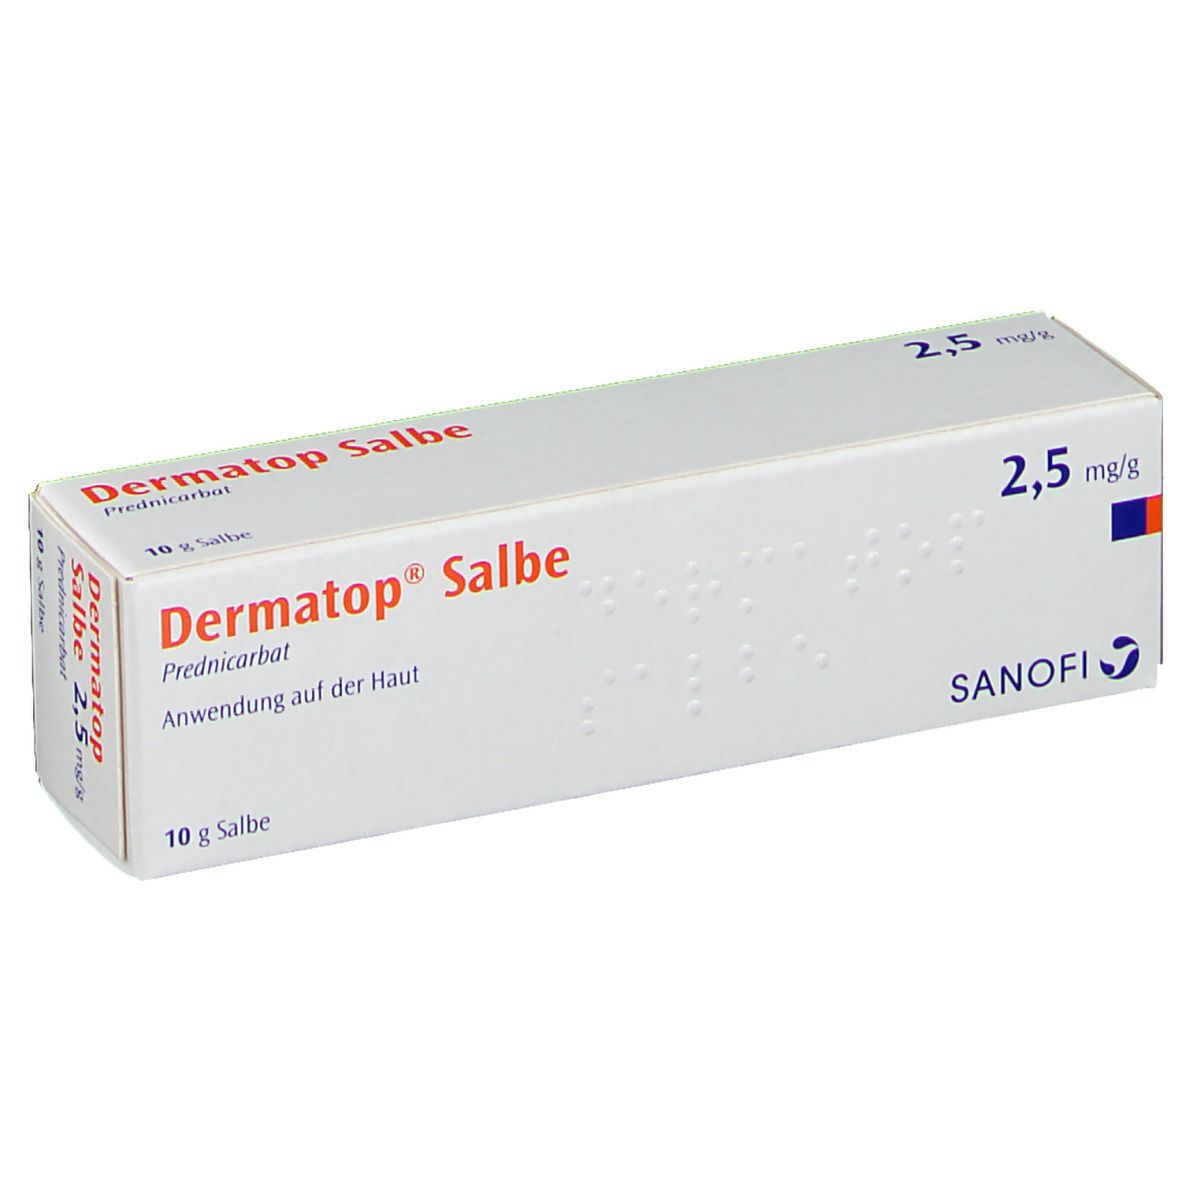 Dermatop® Salbe 2,5 mg/g